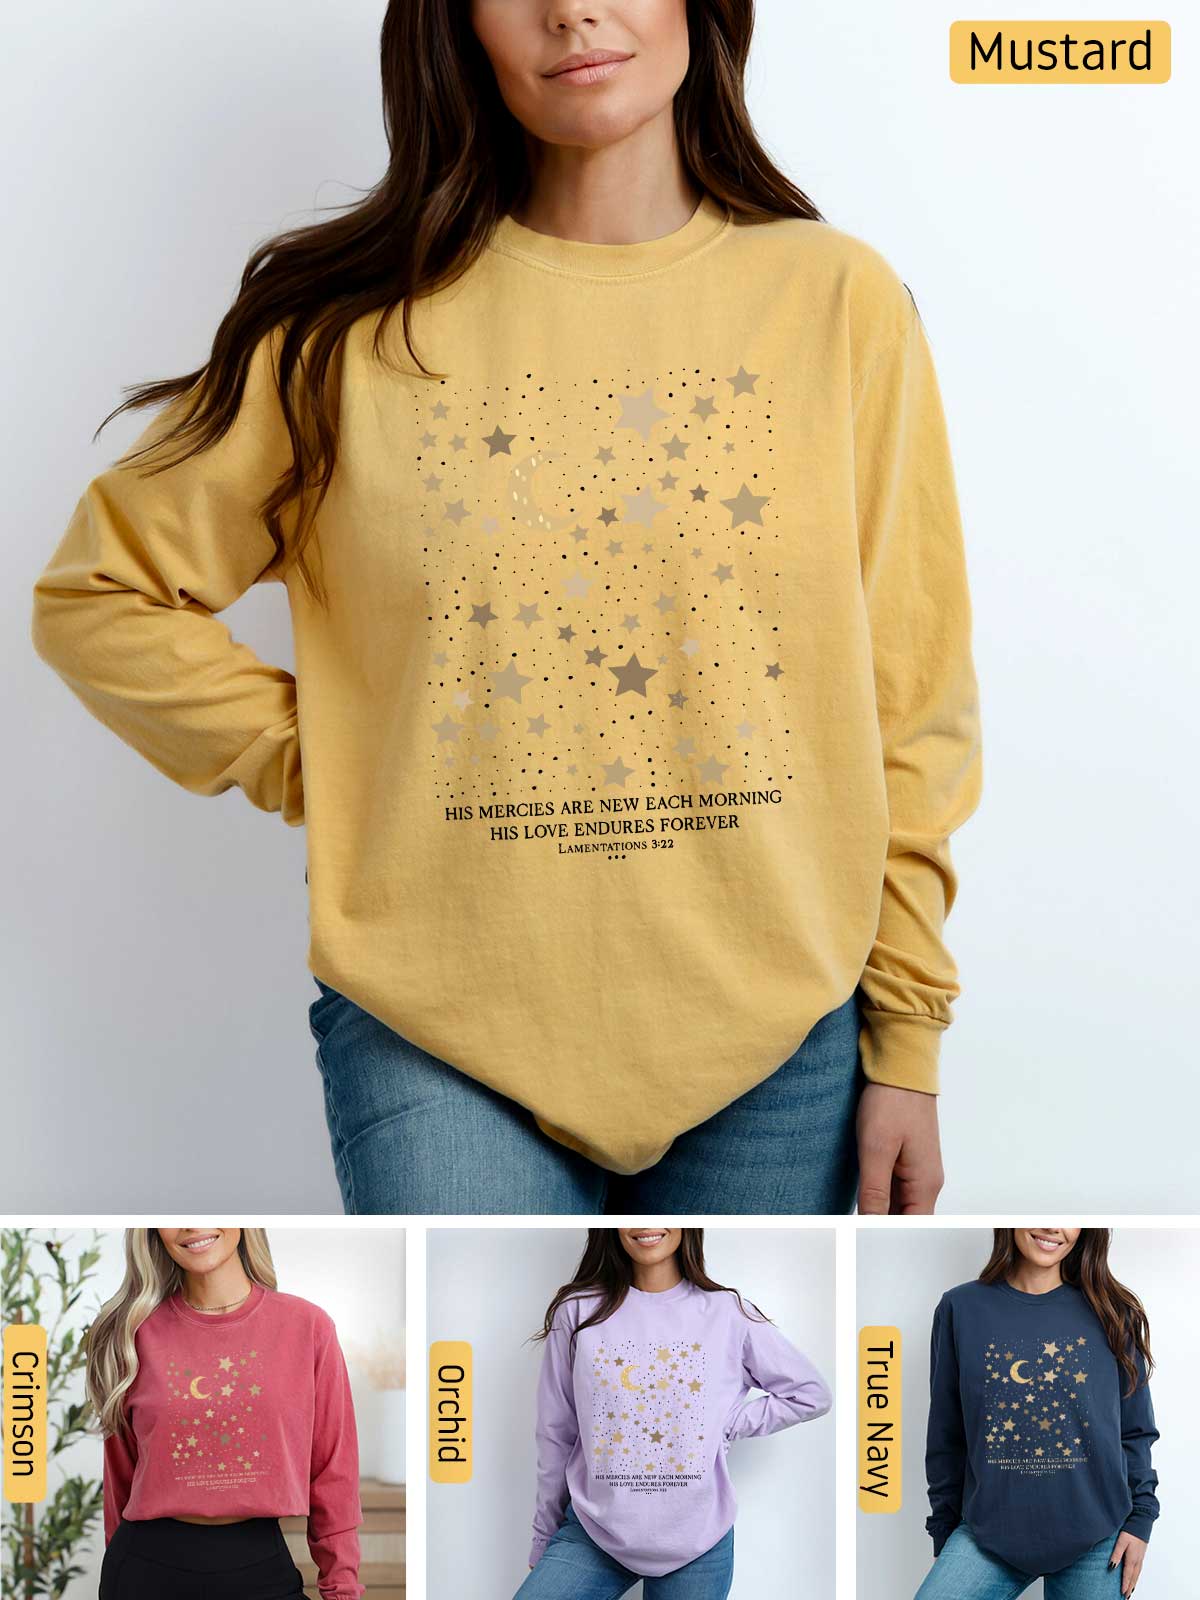 a woman wearing a sweatshirt with stars on it